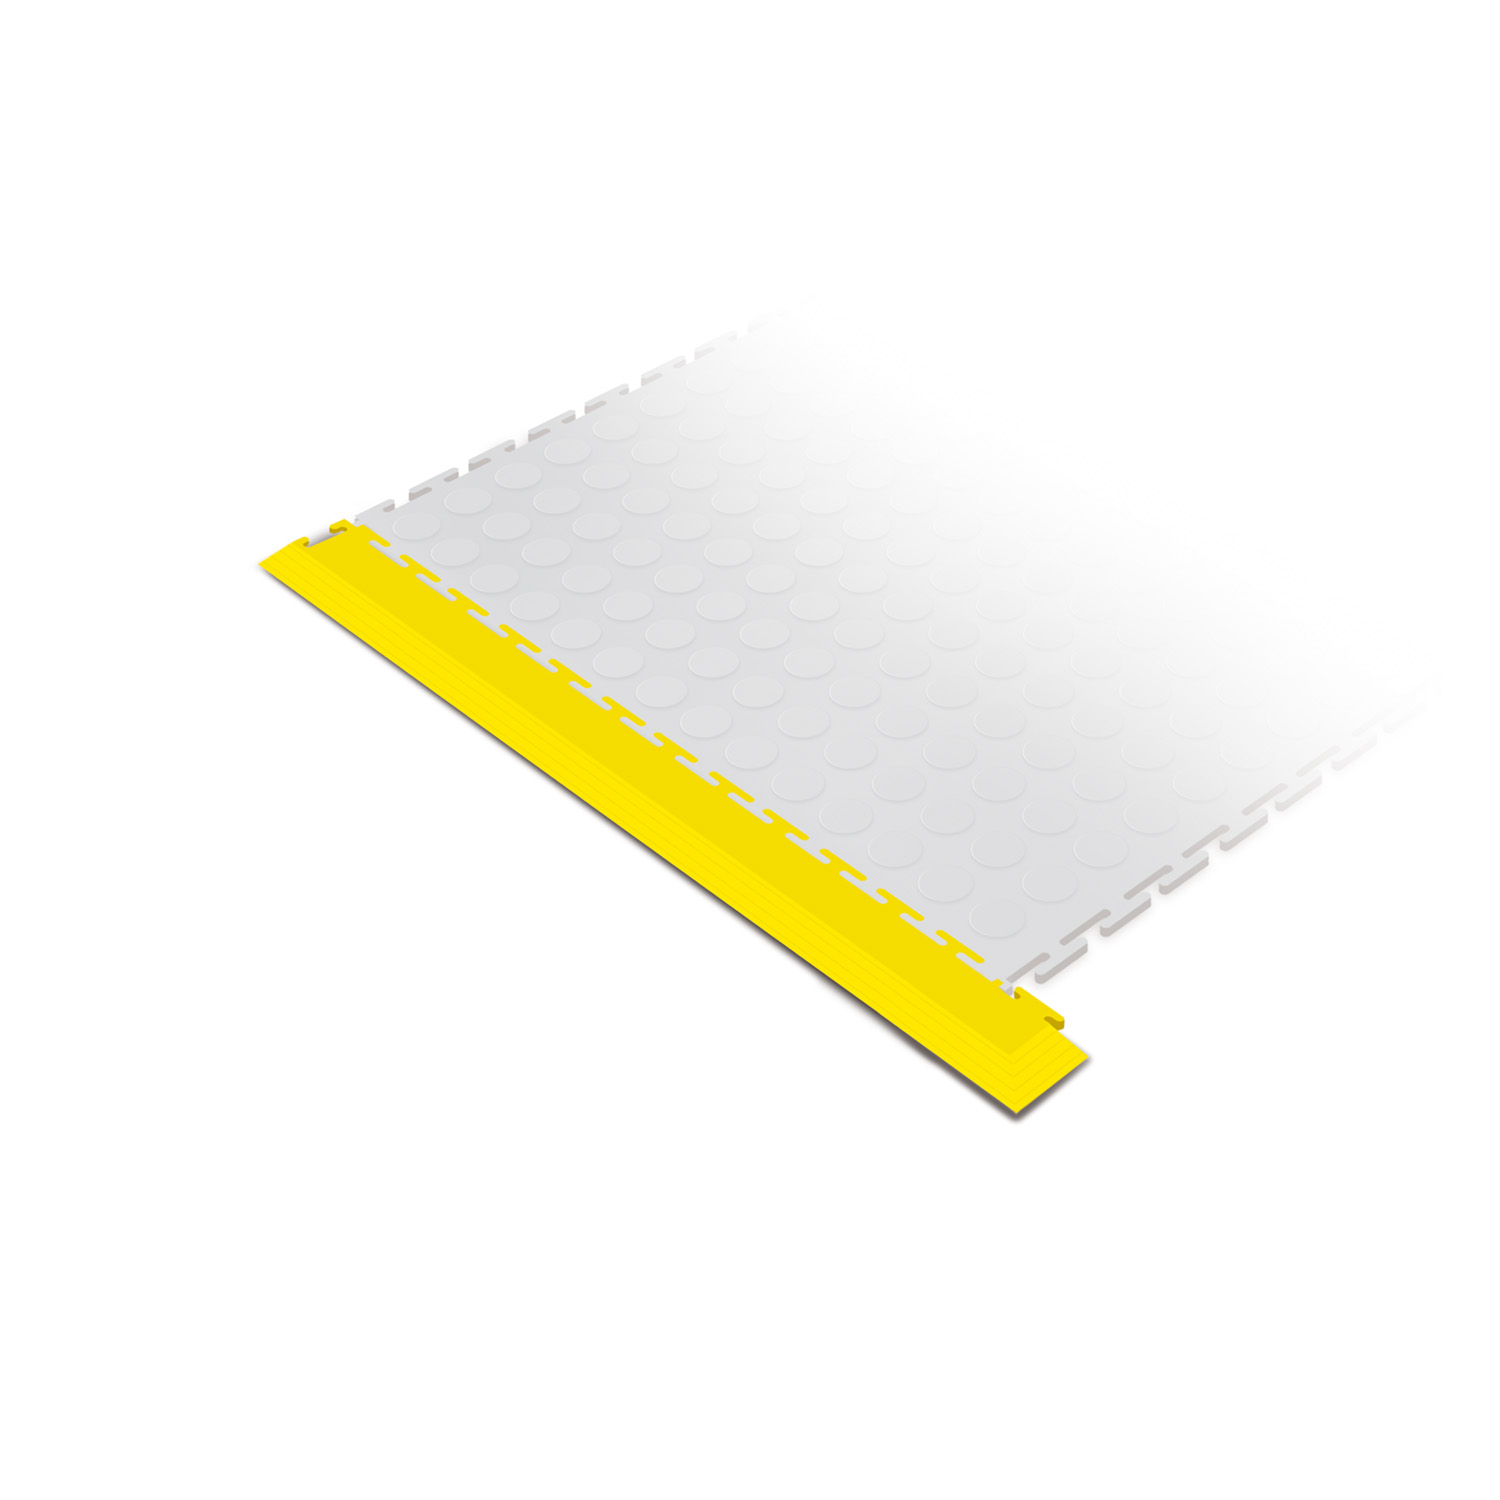 Standard corner edge ramp tile (yellow)